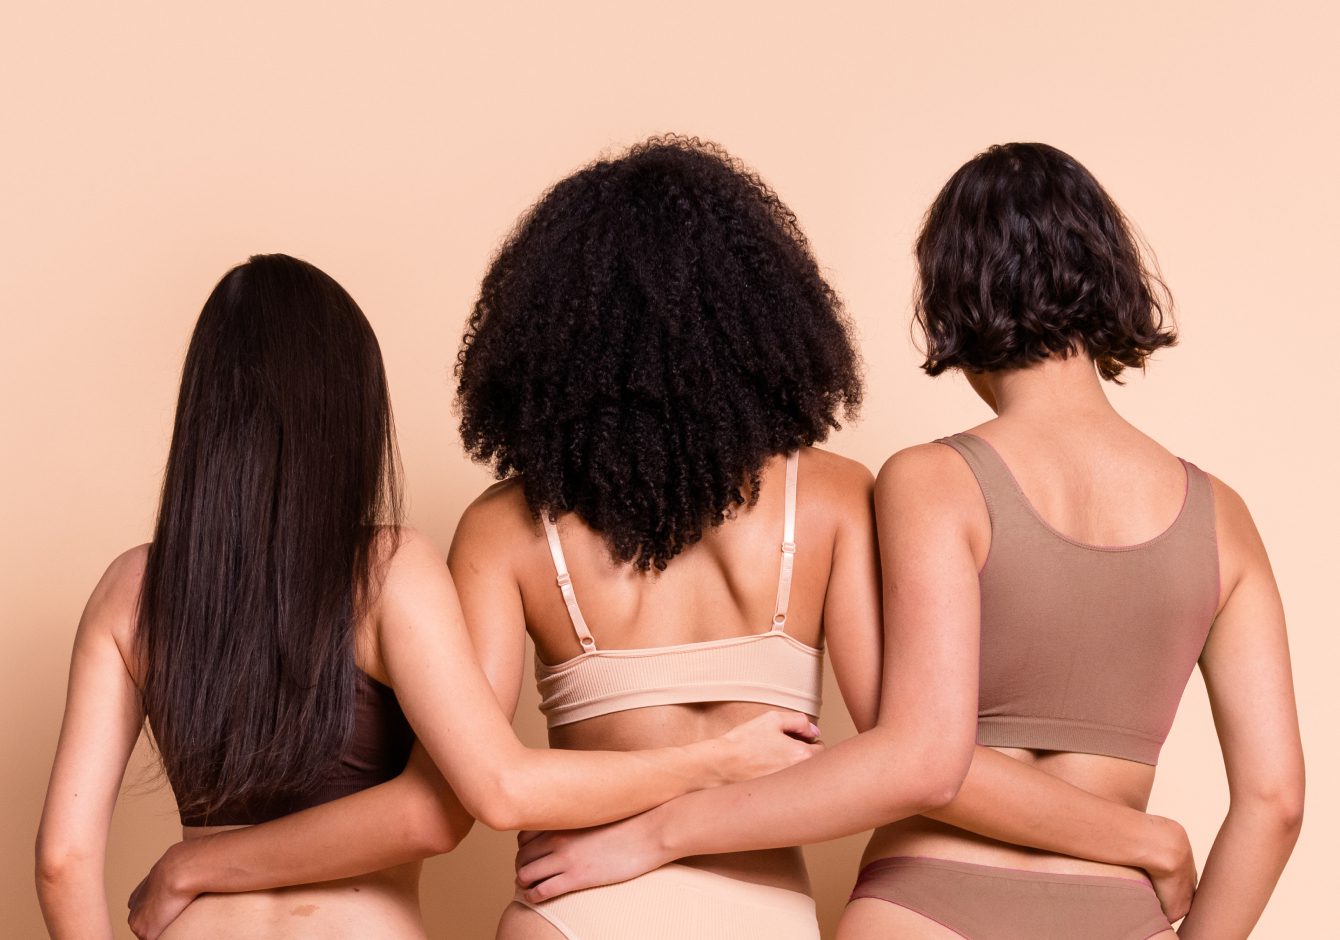 Women with diverse skin tones modelling underwear